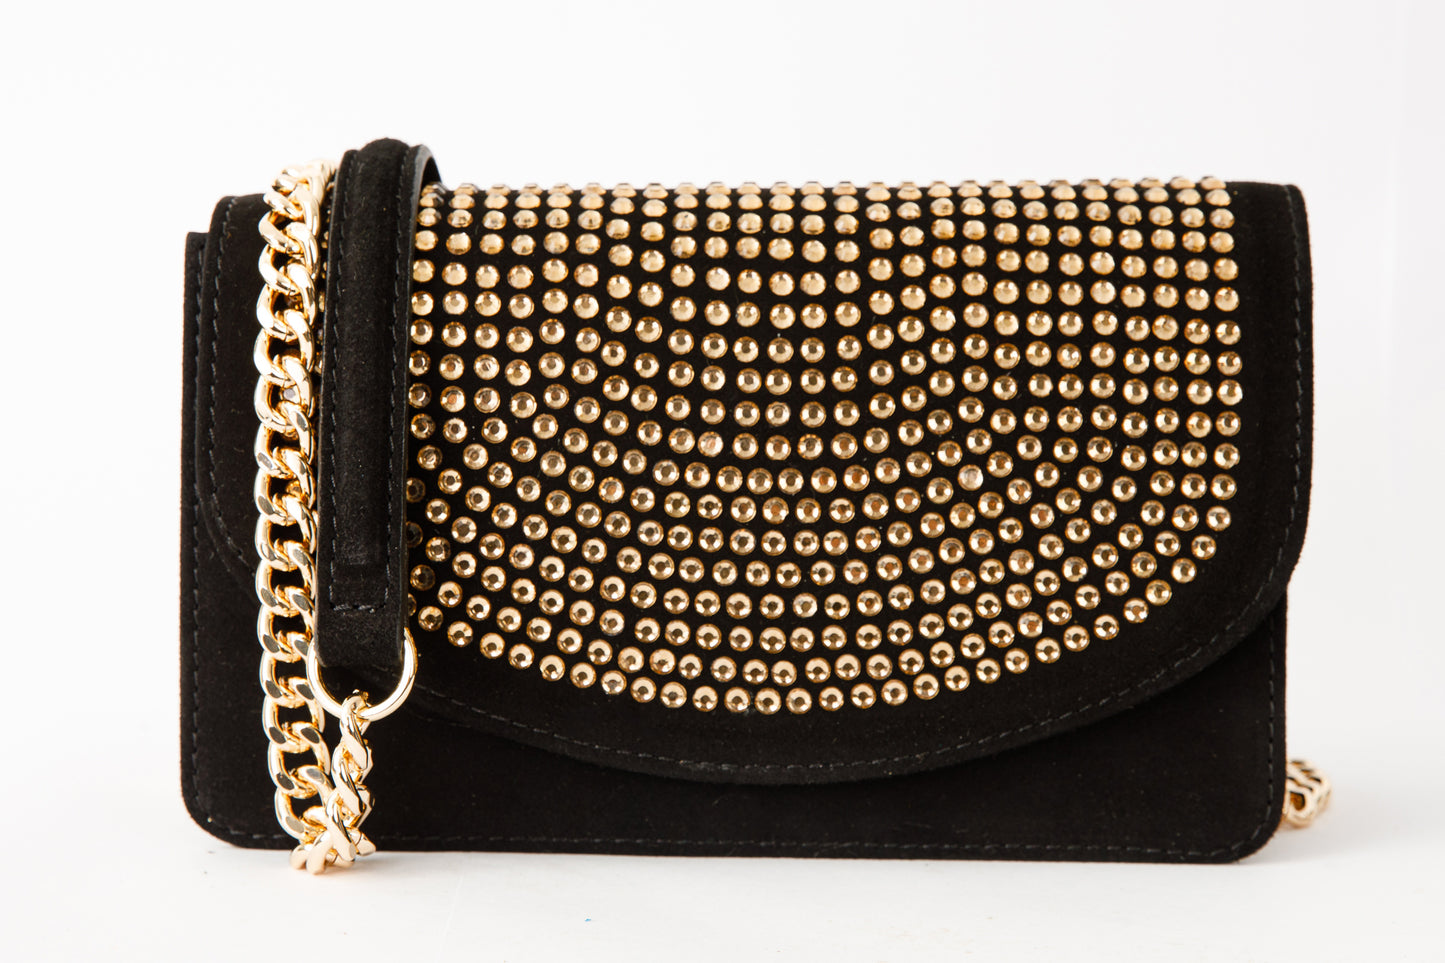 The Ailano Black Glitter Leather Handbag